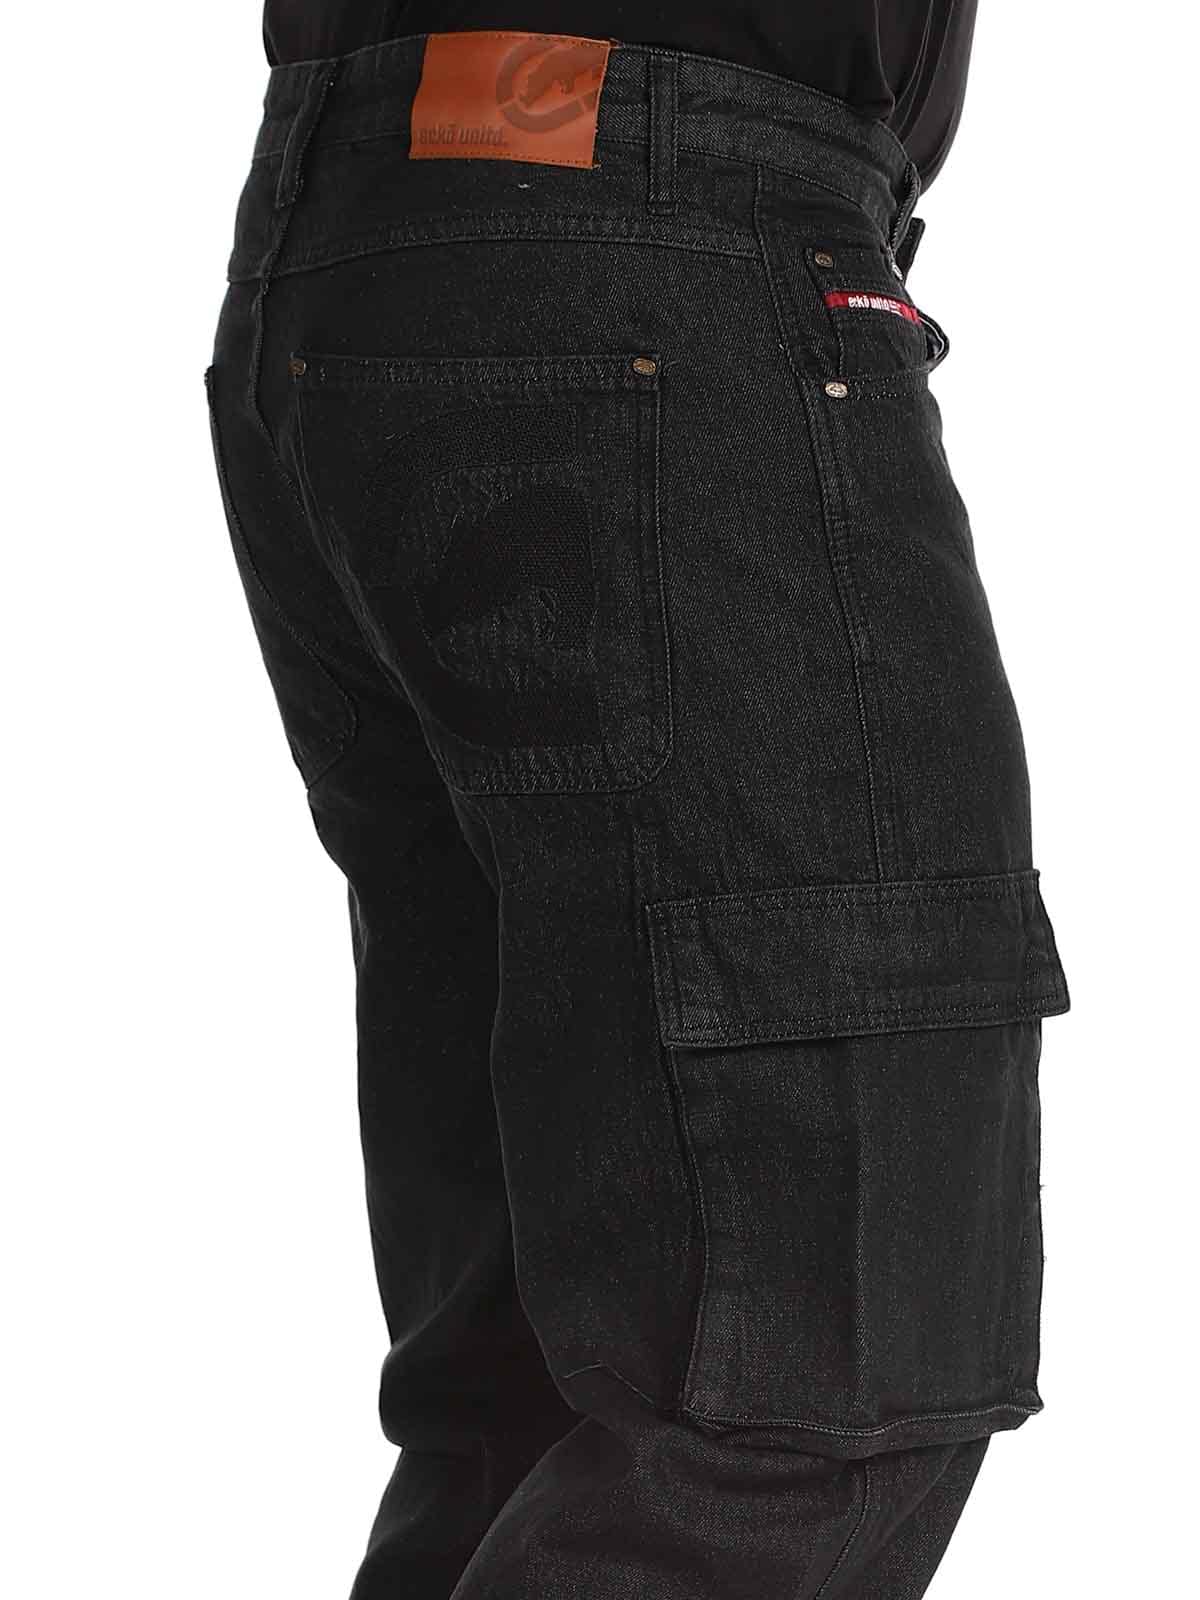 Ecko-unitd-jeans6.jpg